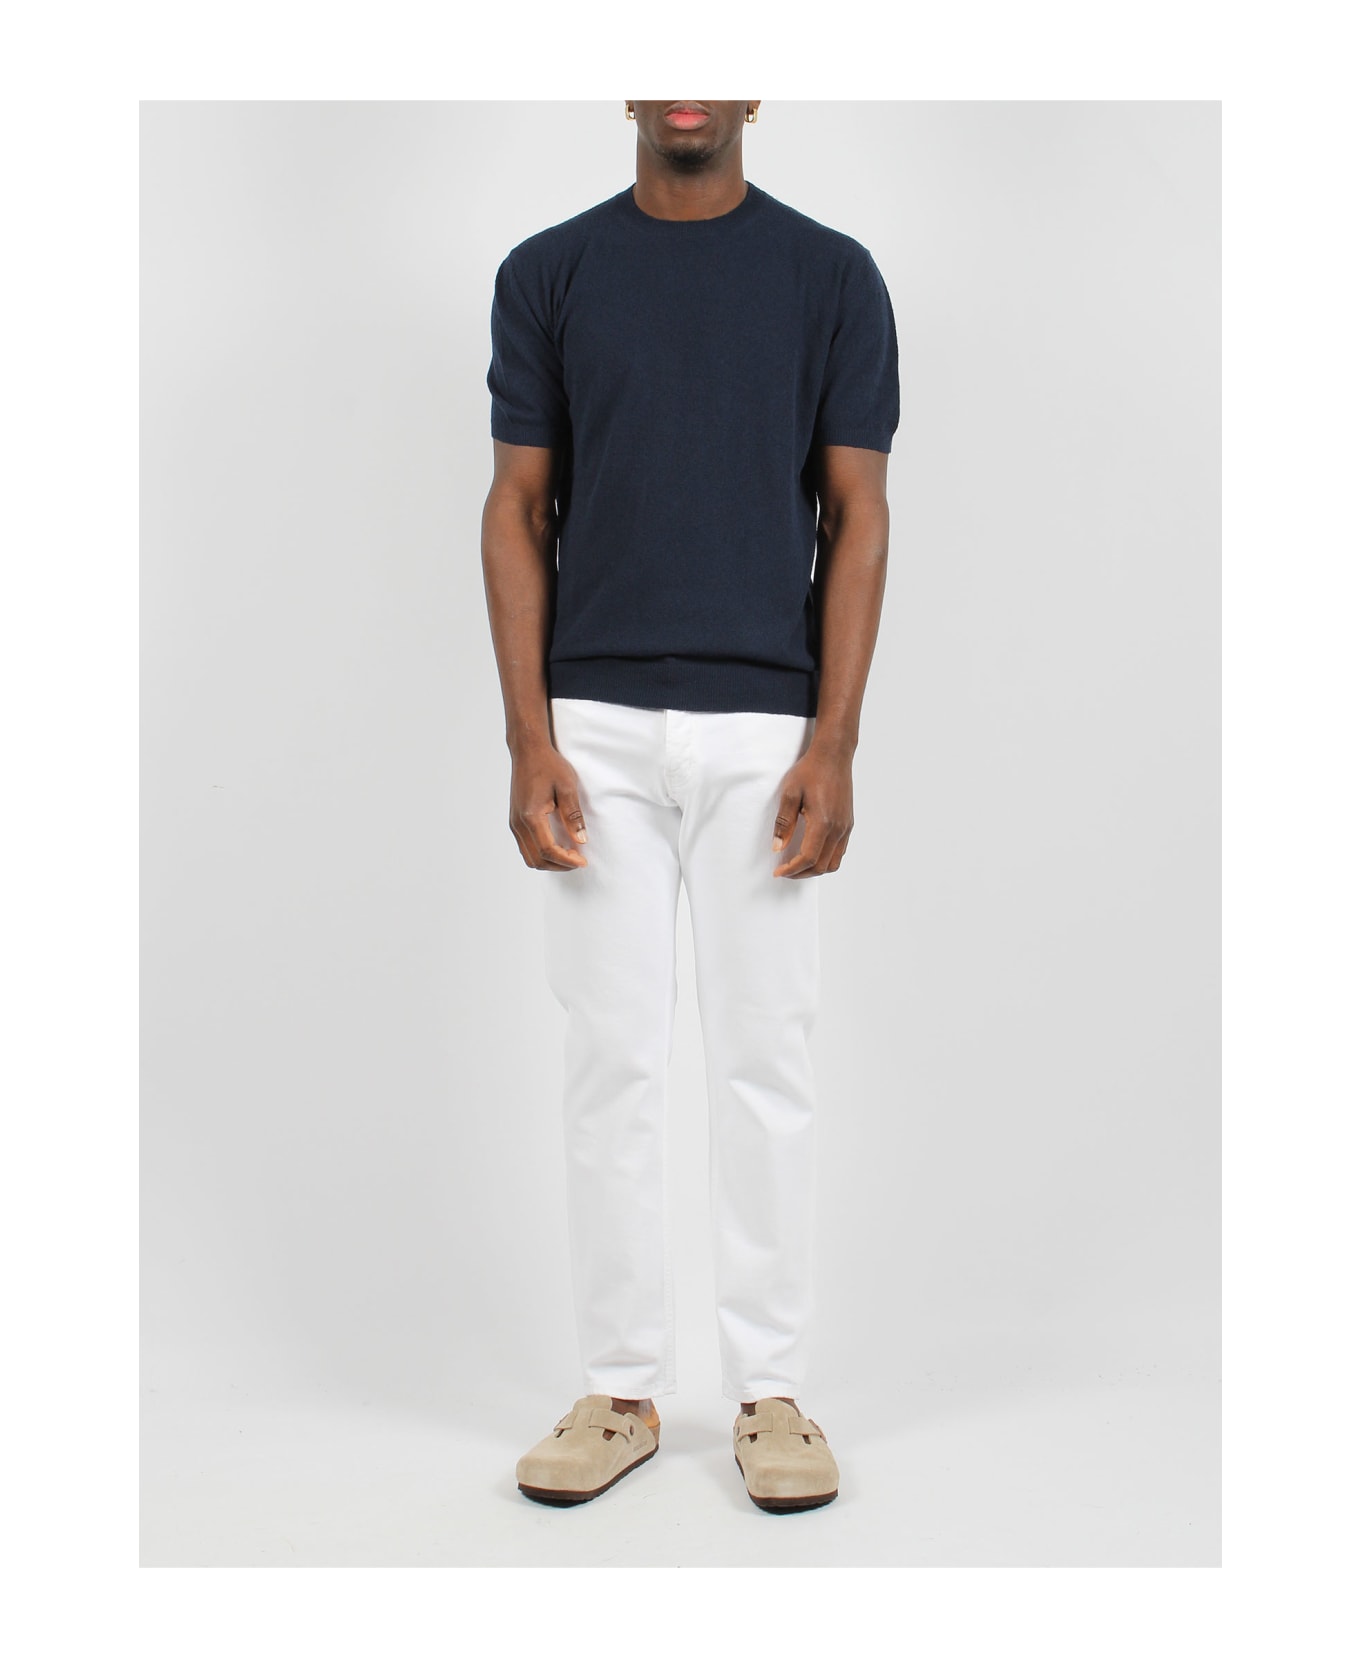 Haikure Tokyo Slim Bull Denim Jeans - White